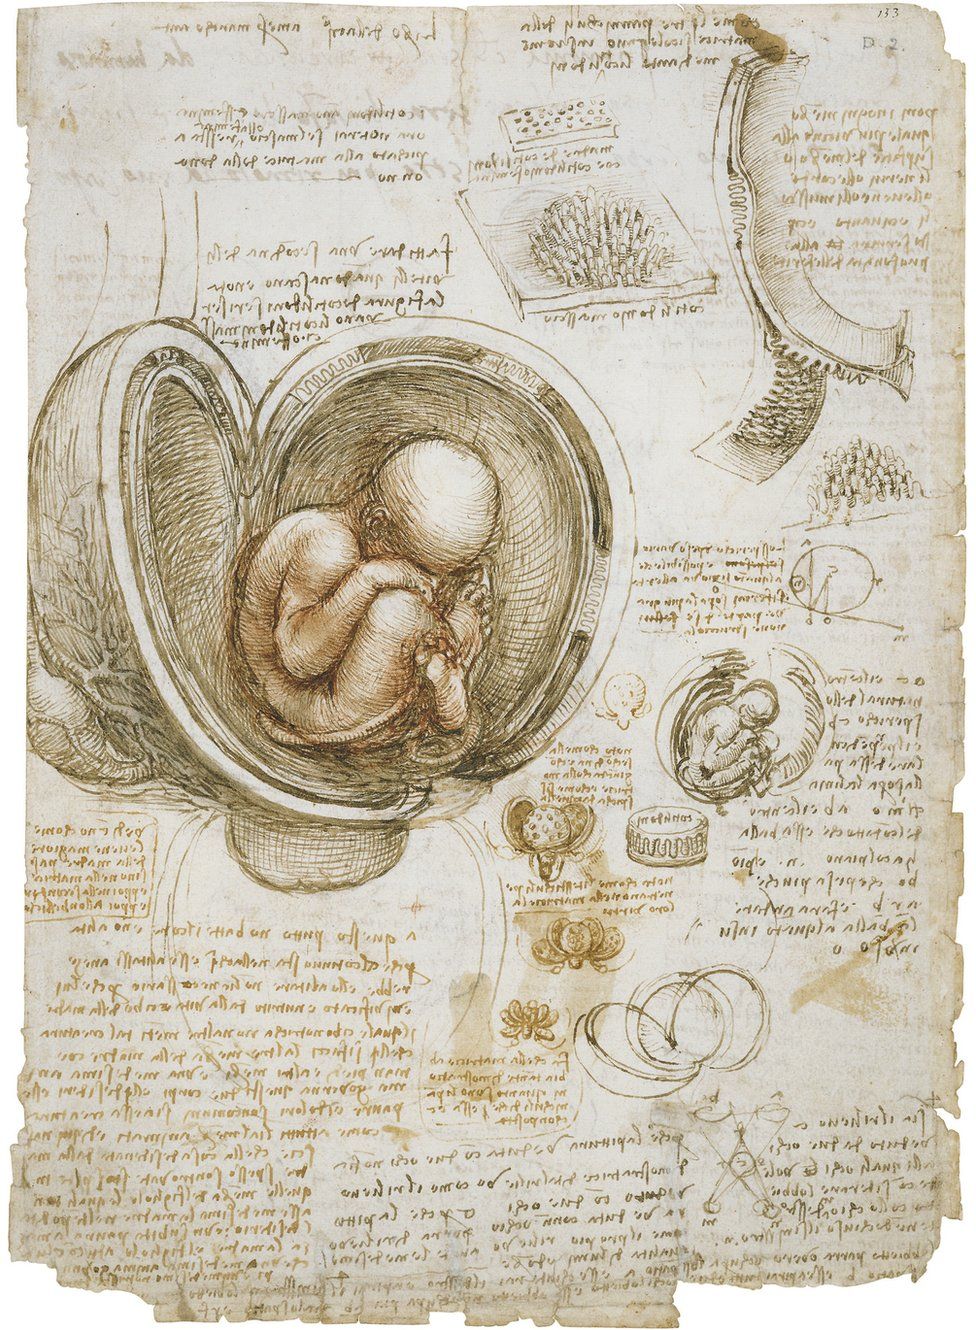 Anatomical drawing showing a foetus in a womb by Leonardo da Vinci